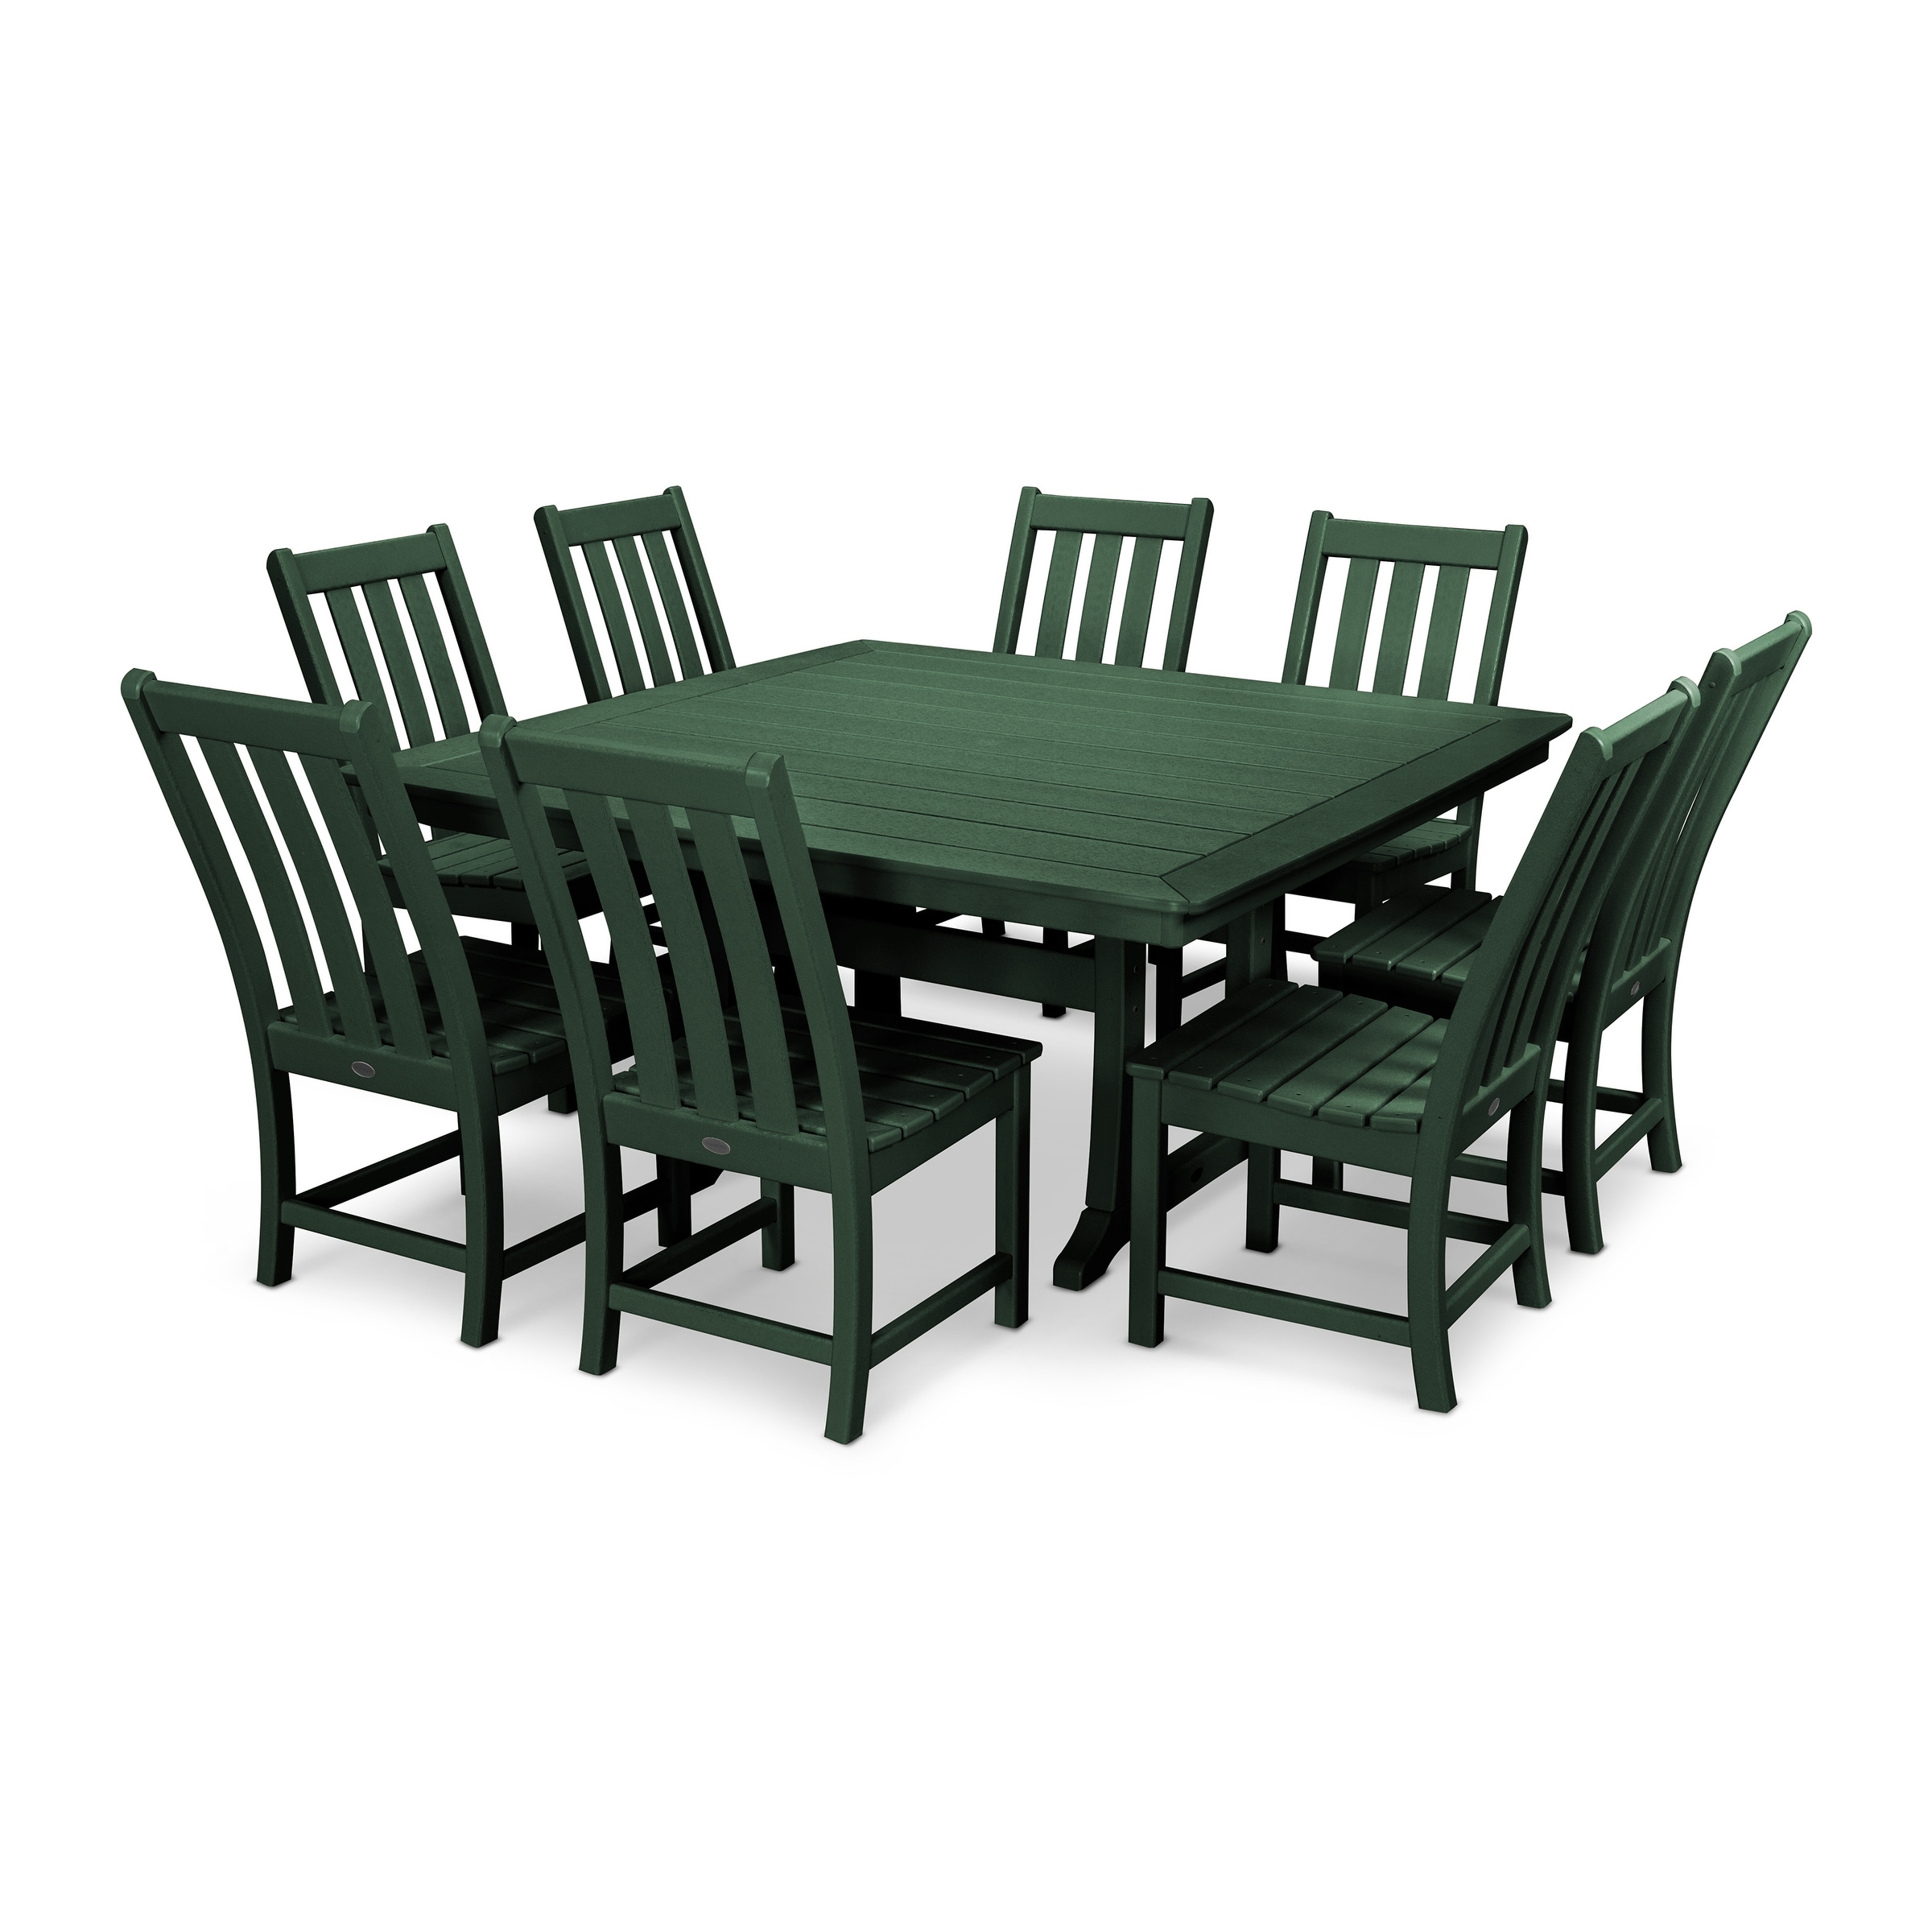 Polywood Vineyard 9-piece Outdoor Dining Table Set